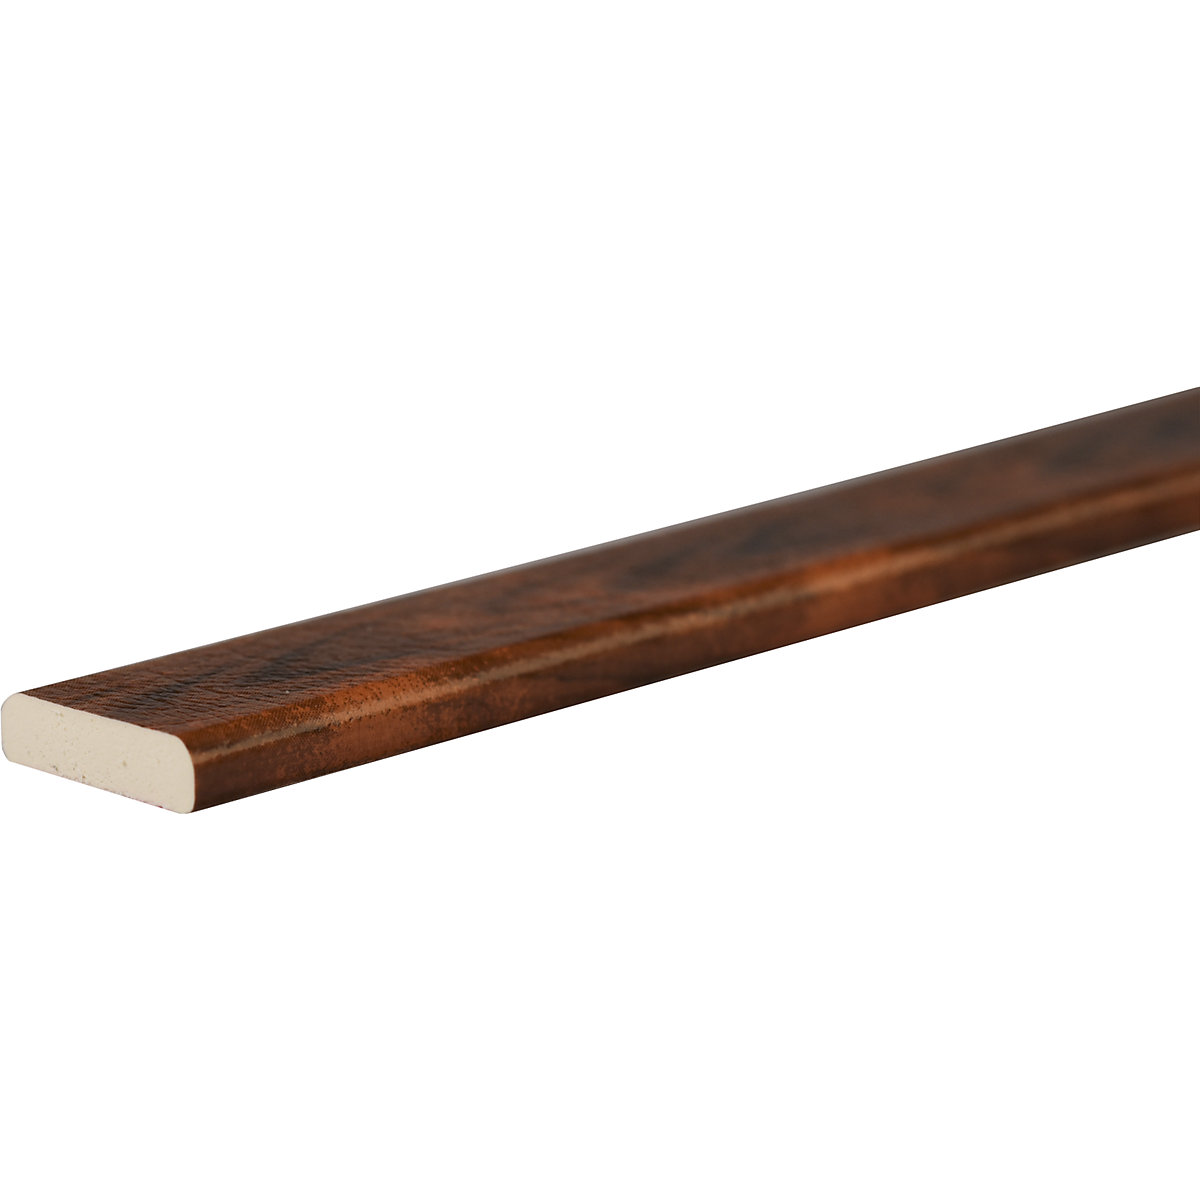 Knuffi®-oppervlaktebescherming – SHG, type F, stuk van 1 m, gecoat hout cherry-34